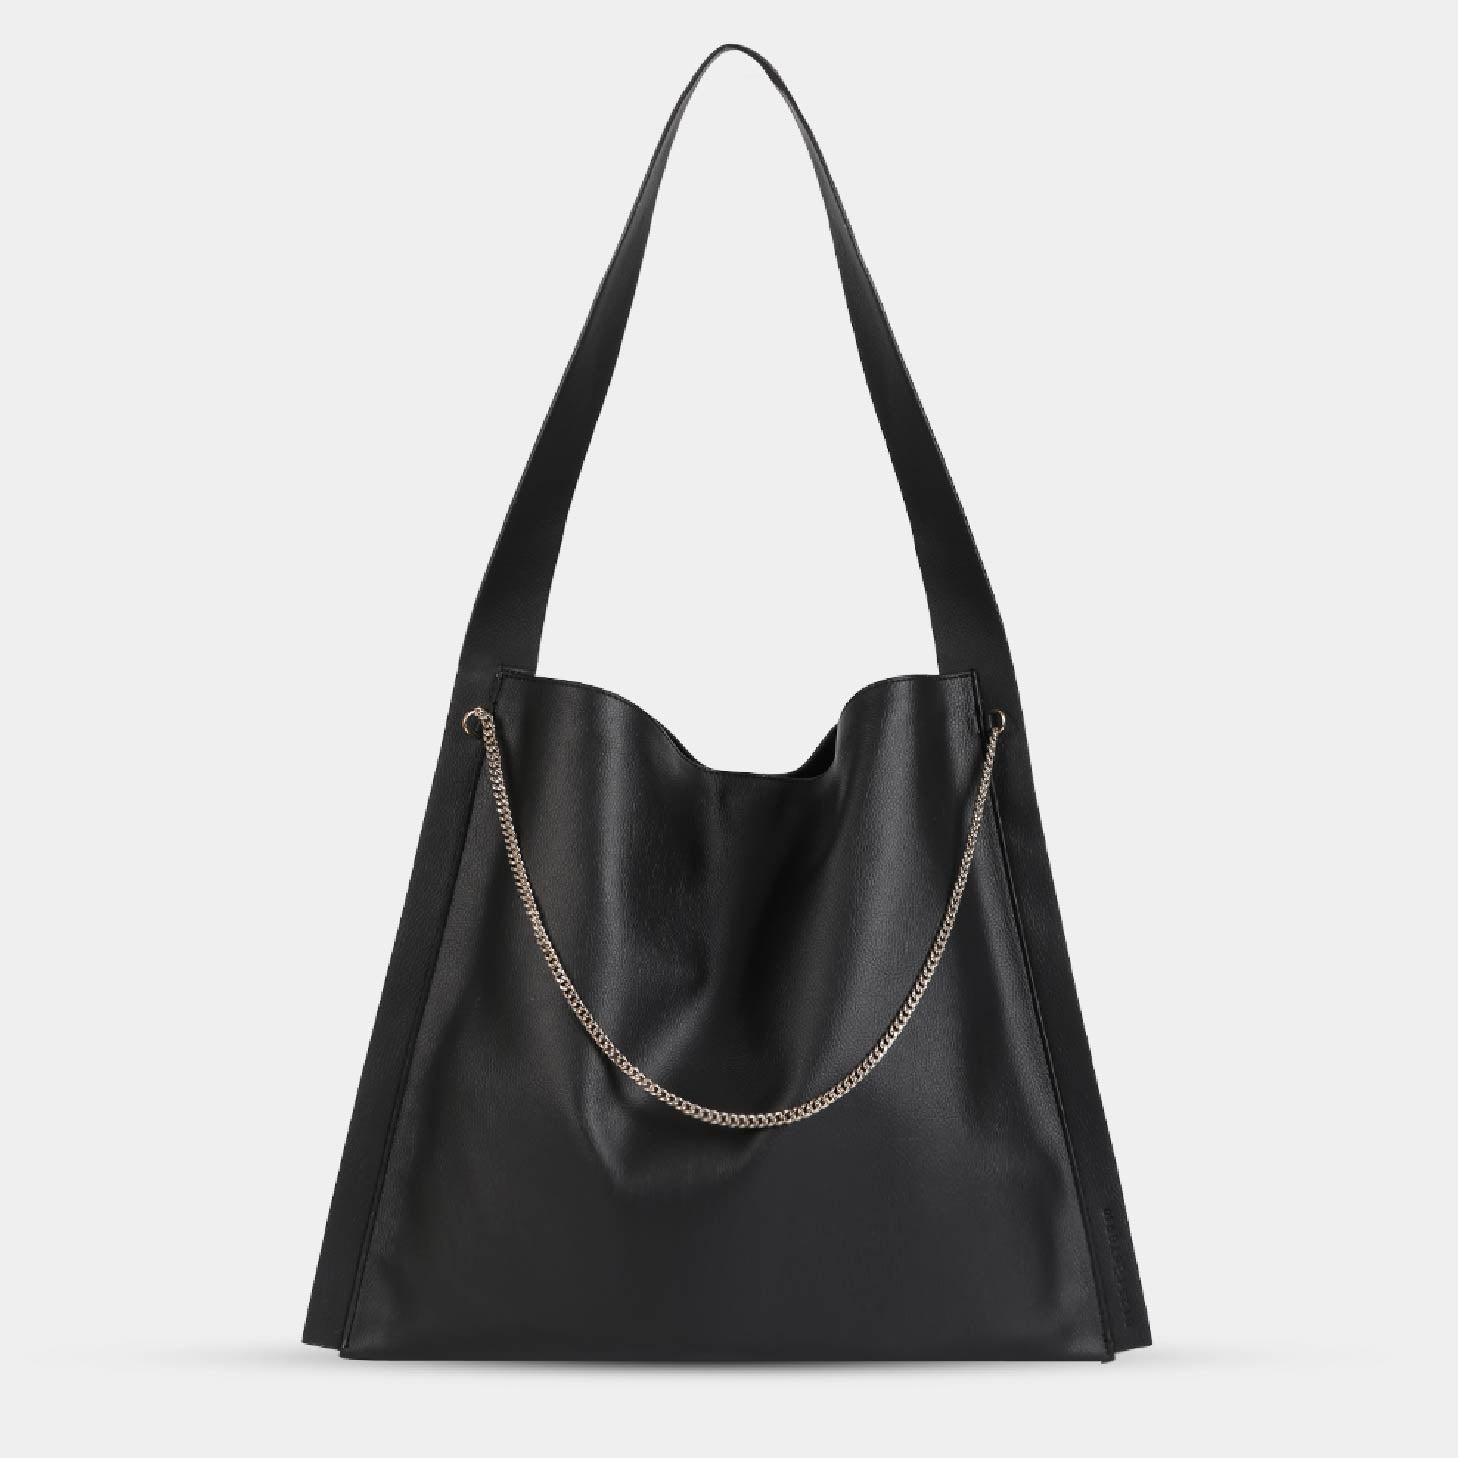 Black PAPER TOTE handbag with black strap